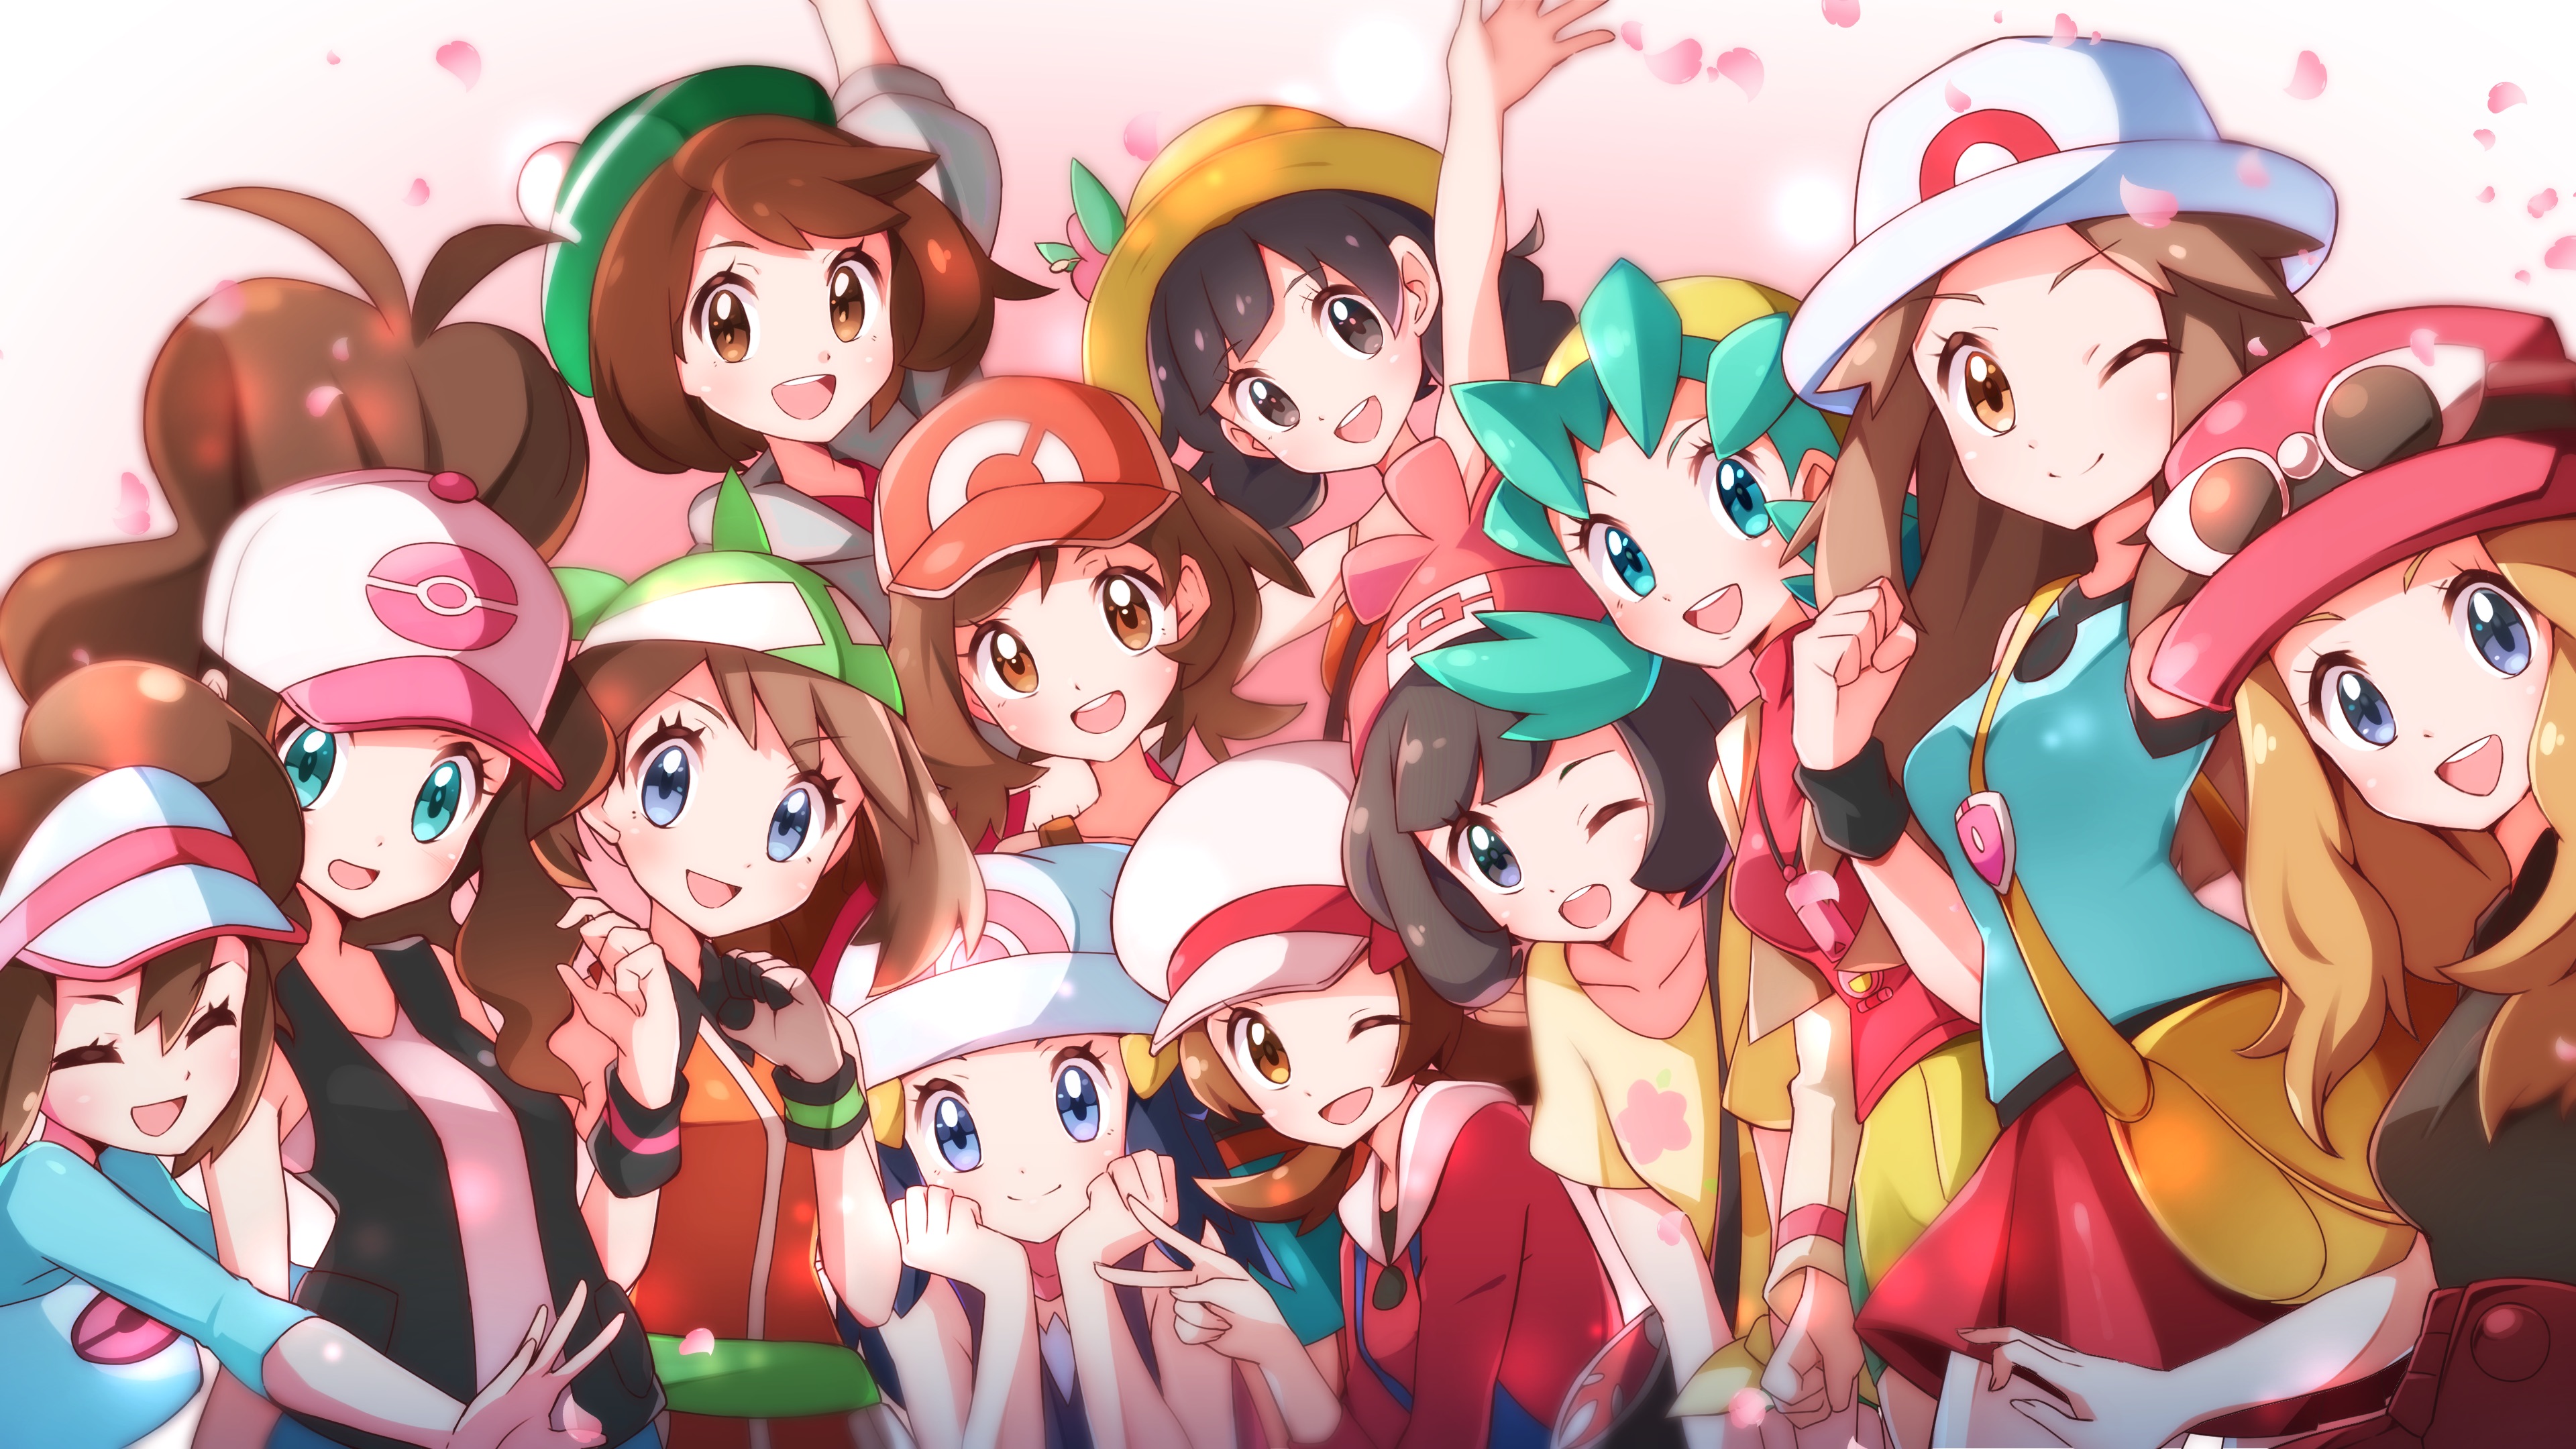 Anime Pokémon 4k Ultra HD Wallpaper by みらー